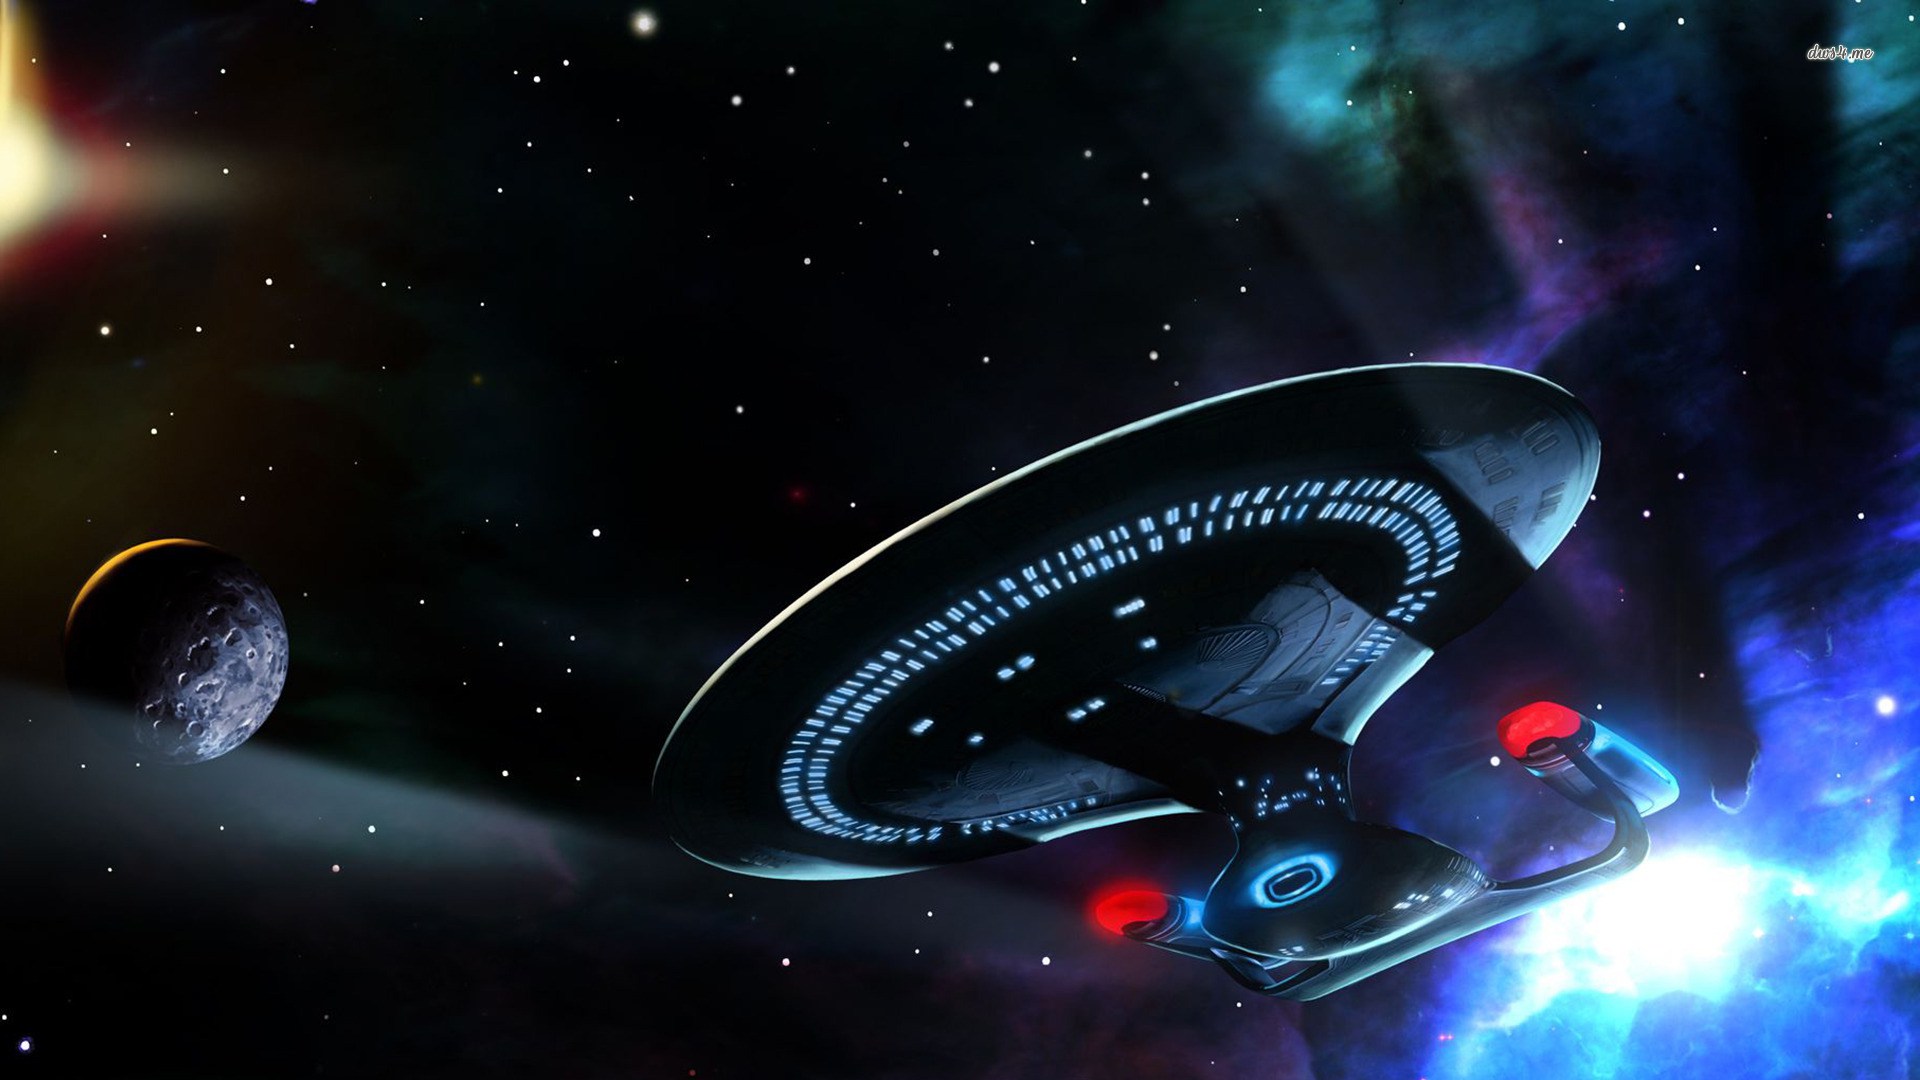 Uss Enterprise Star Trek Into Darkness HD Wallpaper For Windows